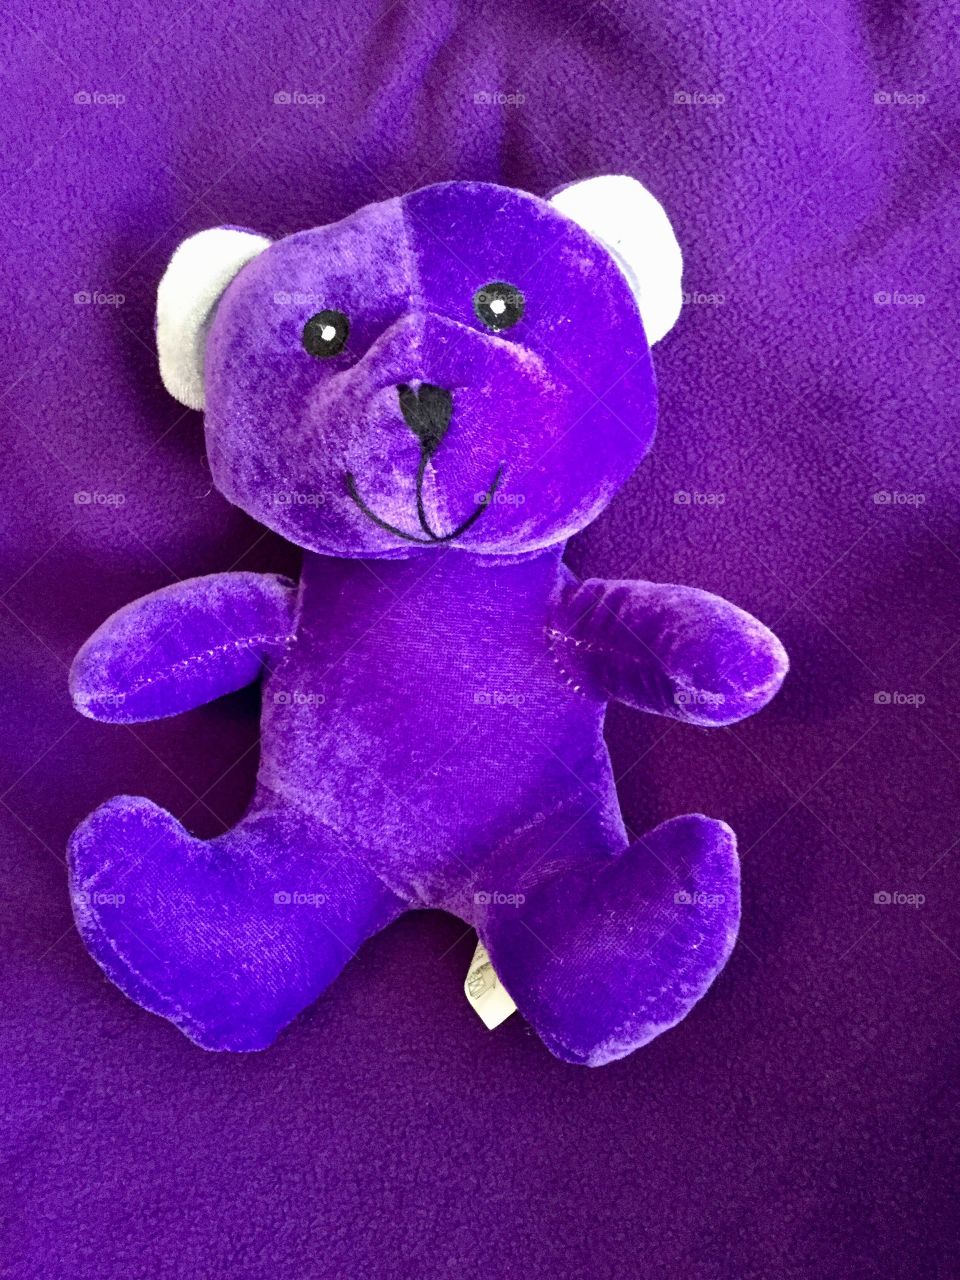 Purple Bear